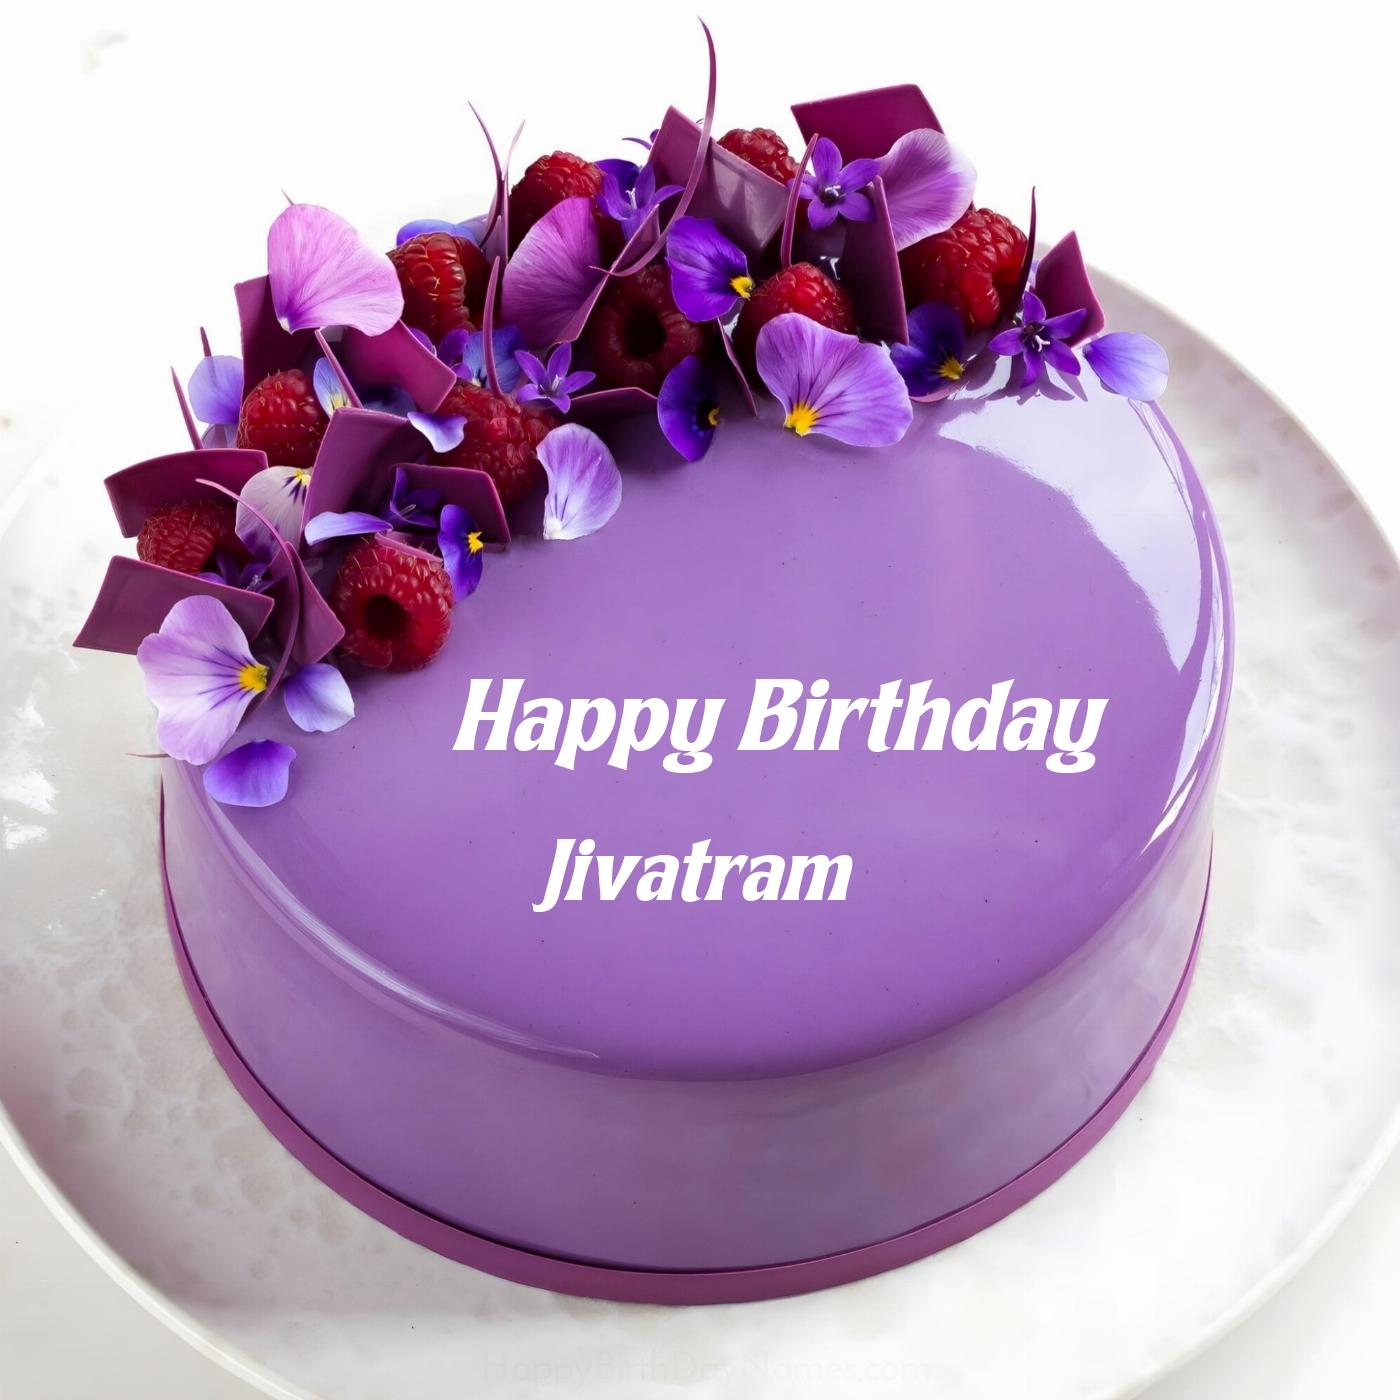 Happy Birthday Jivatram Violet Raspberry Cake